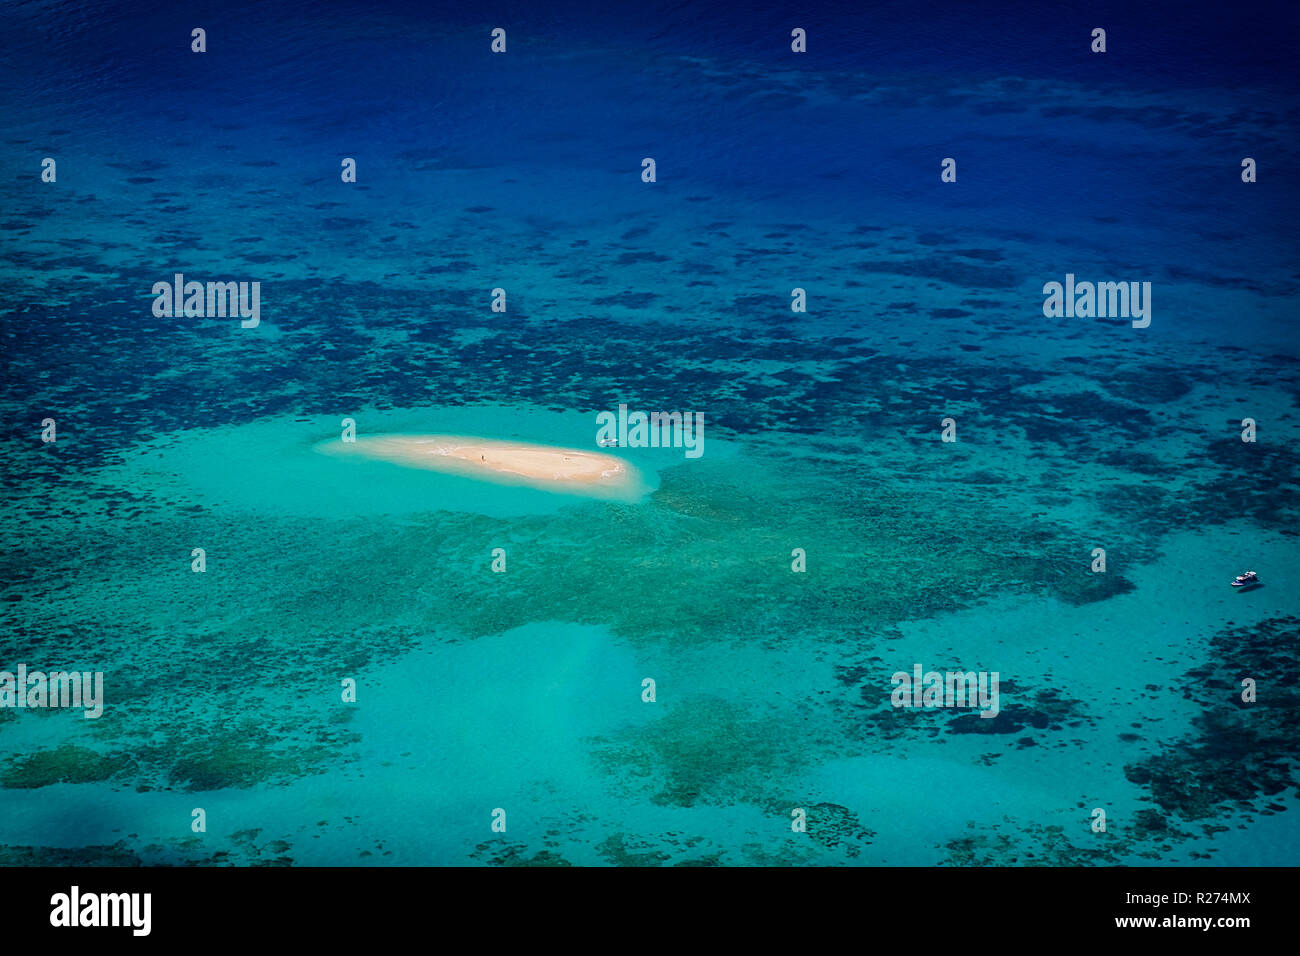 Das Great Barrier Reef, Australien Stockfotografie - Alamy